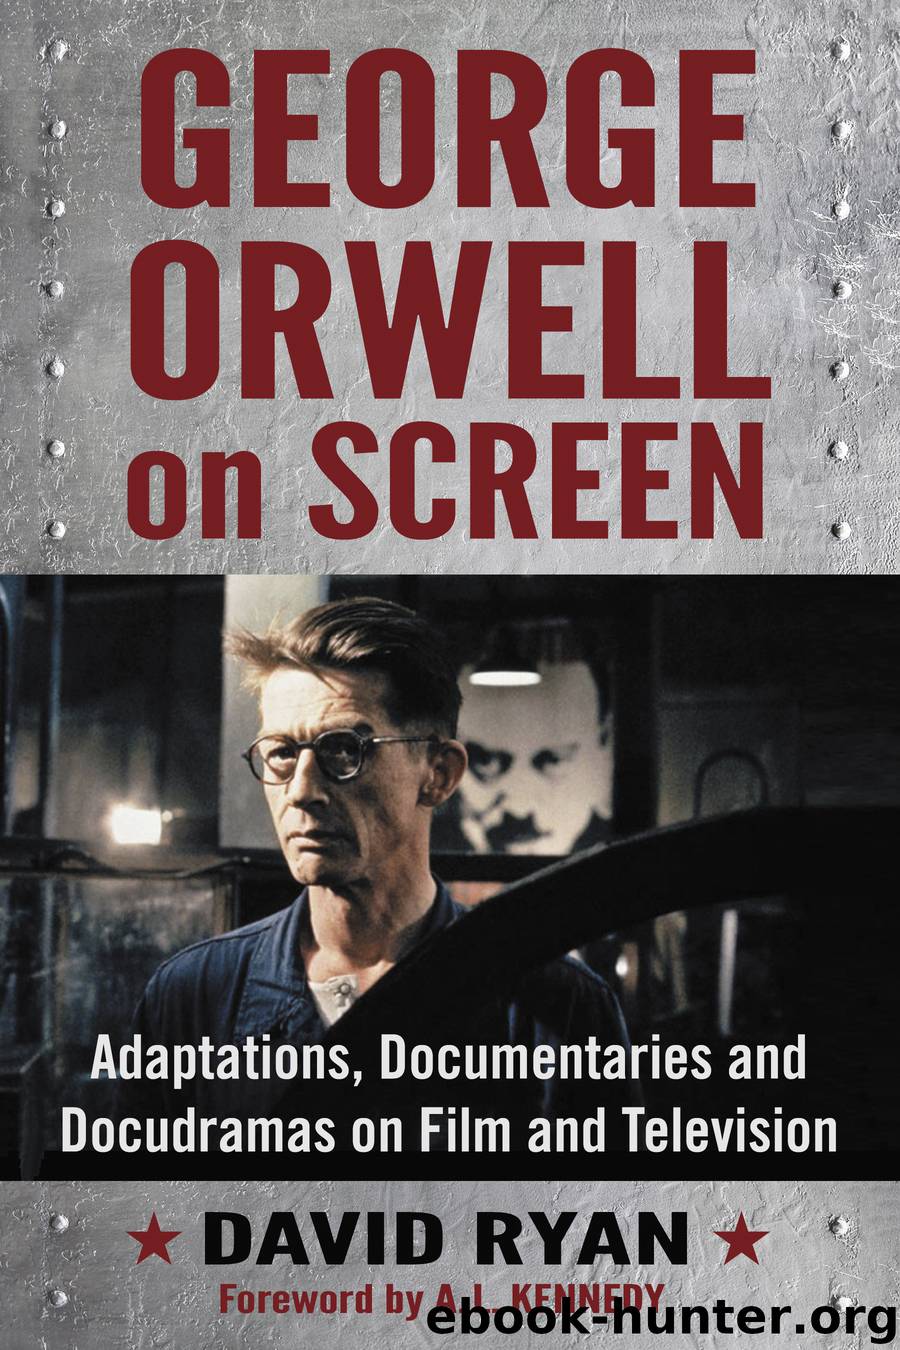 George Orwell on Screen by David Ryan